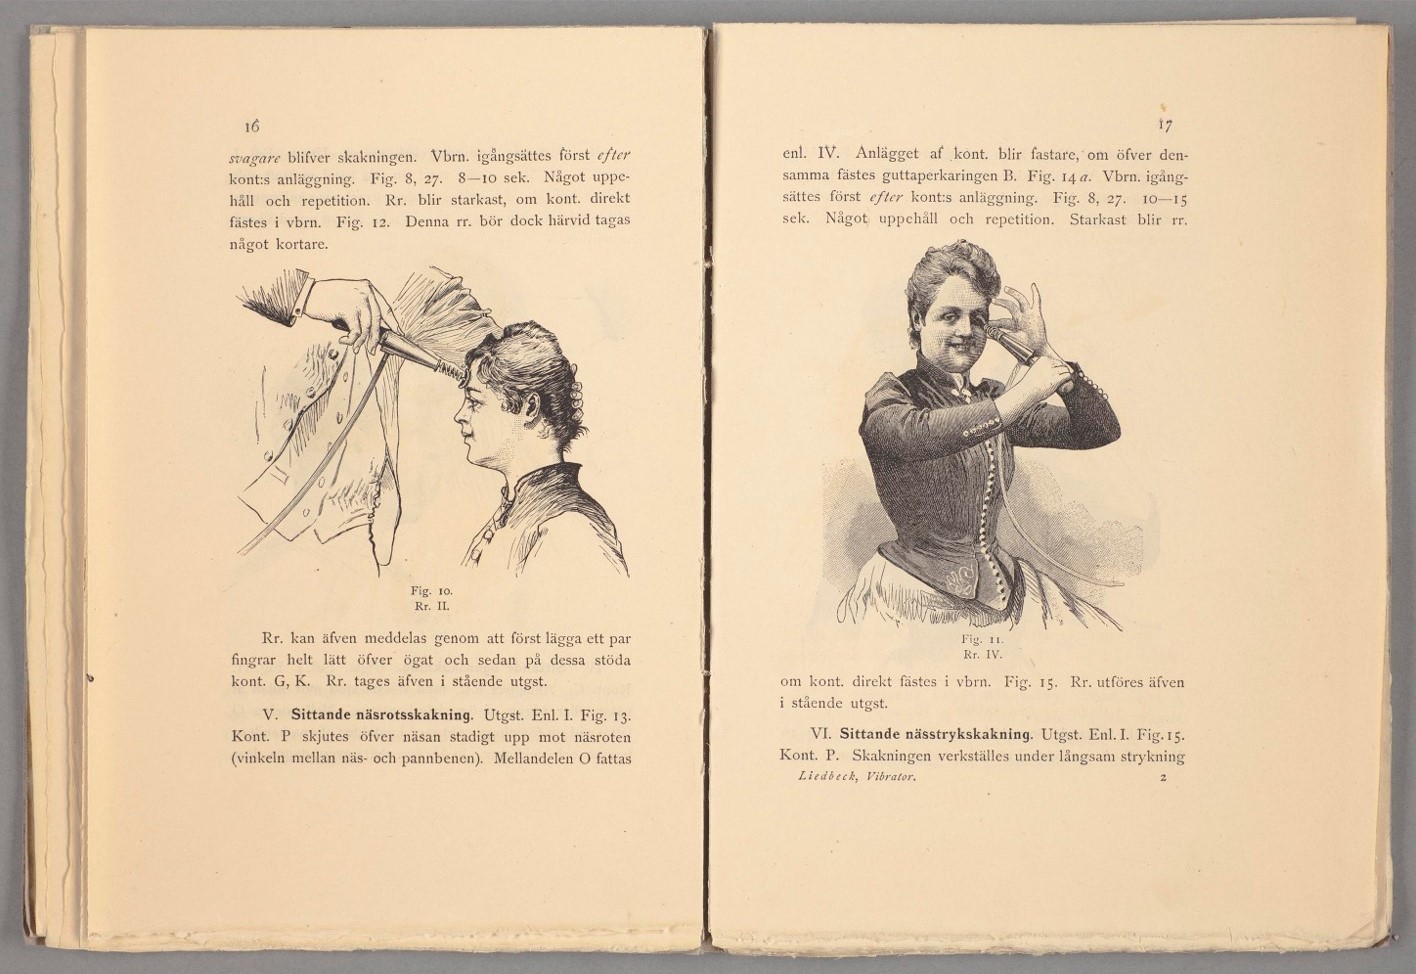 Liedbeck, Vibratorn, 1891 s. 16-17. Foto: KB, Lina Löfström-Baker